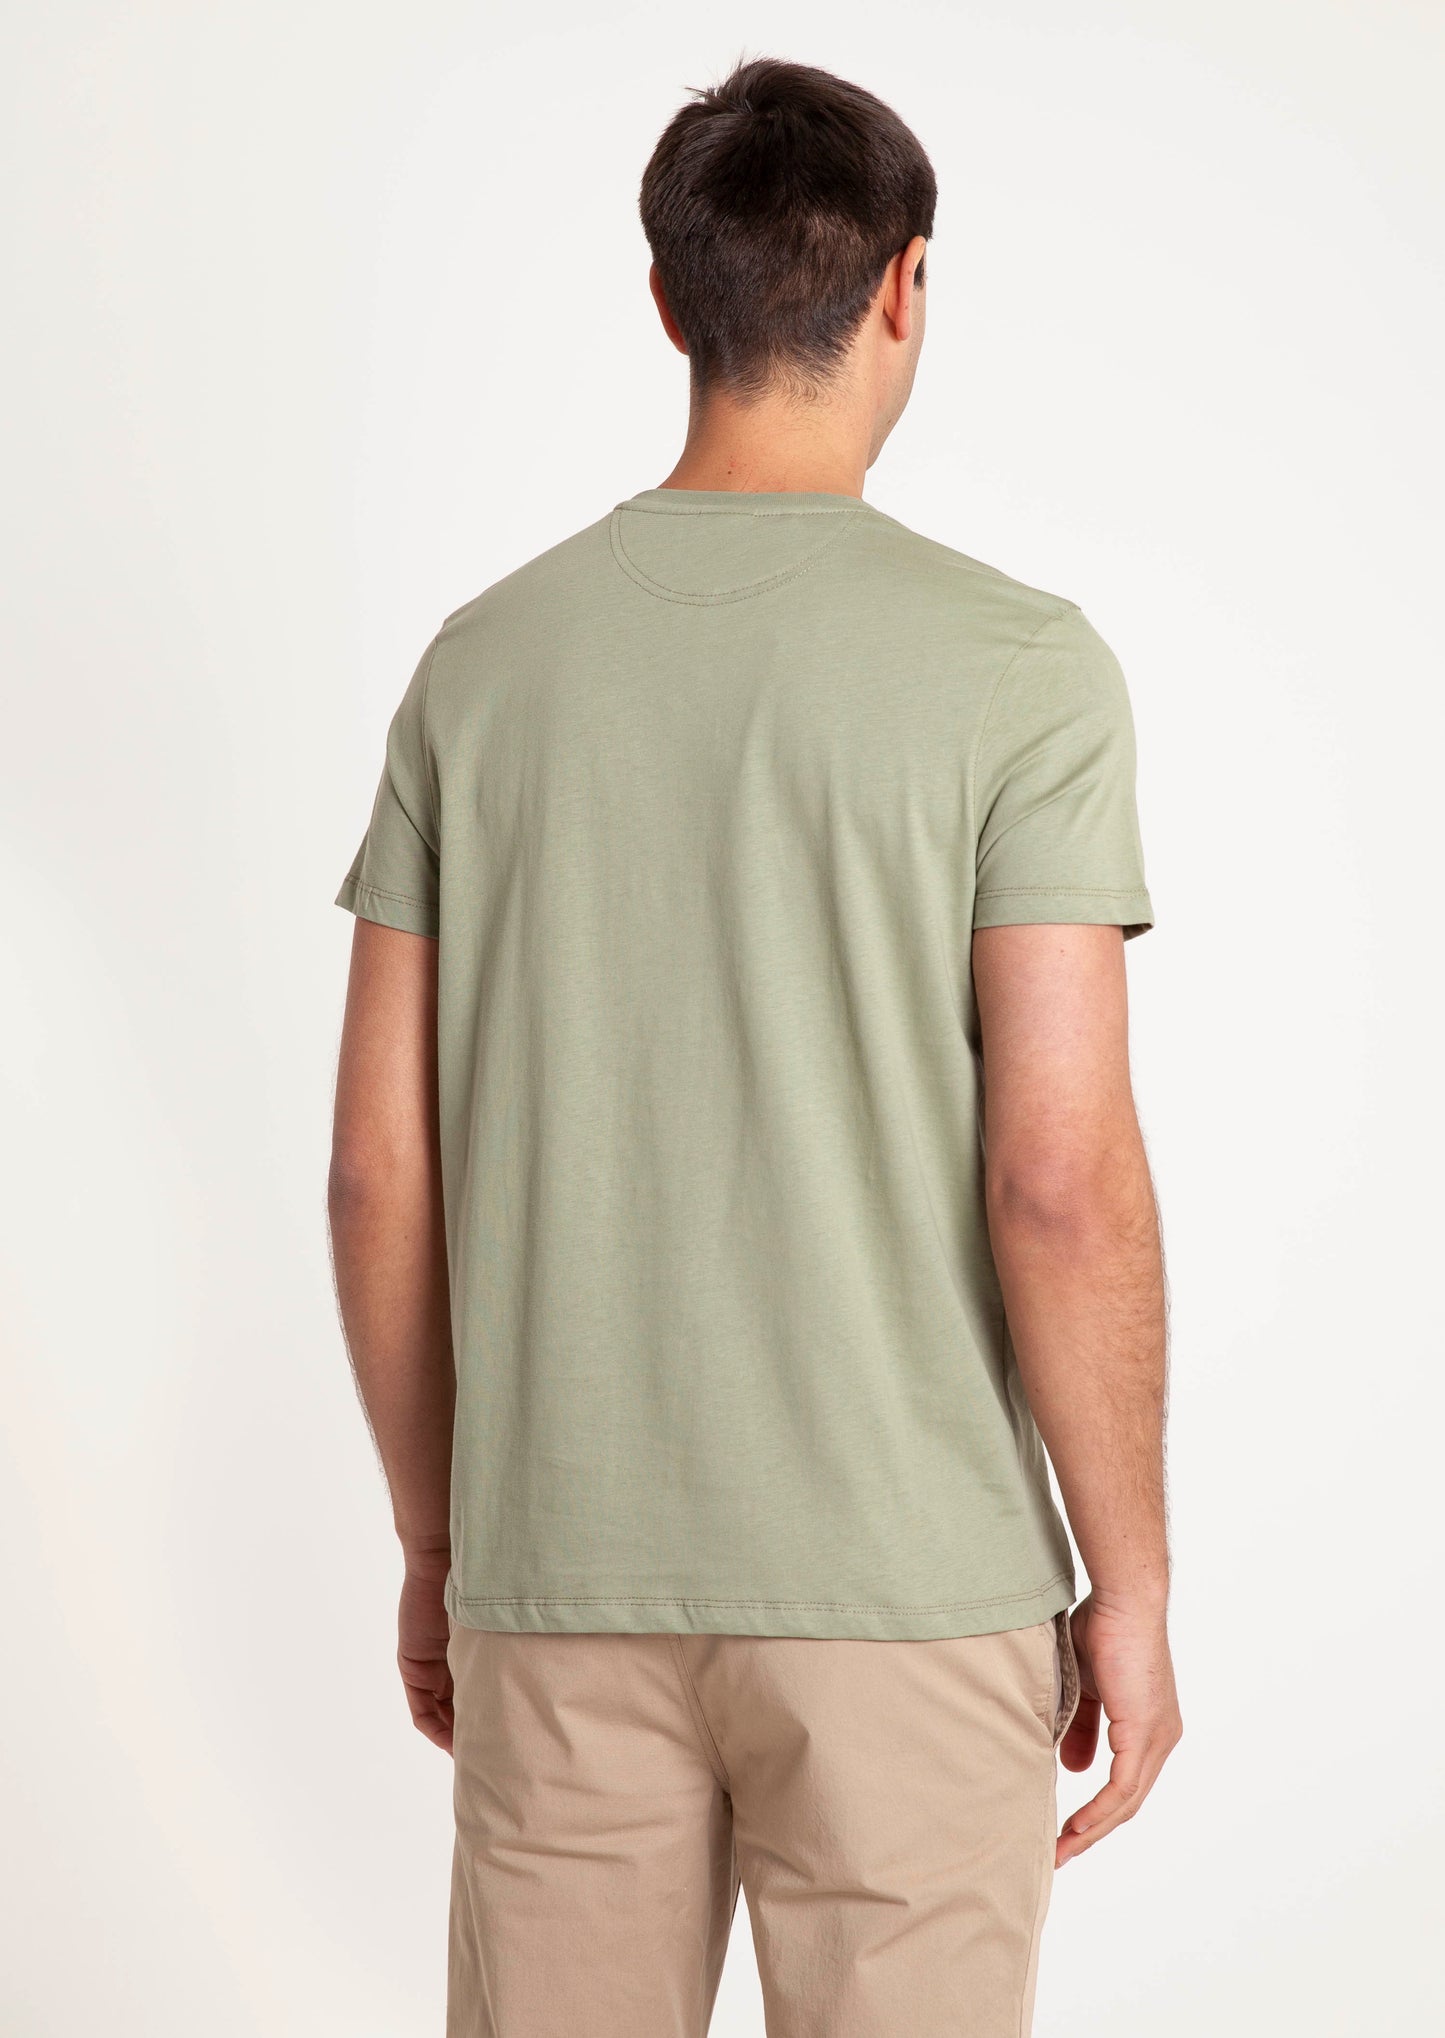 Tartan Crest T-Shirt - Military